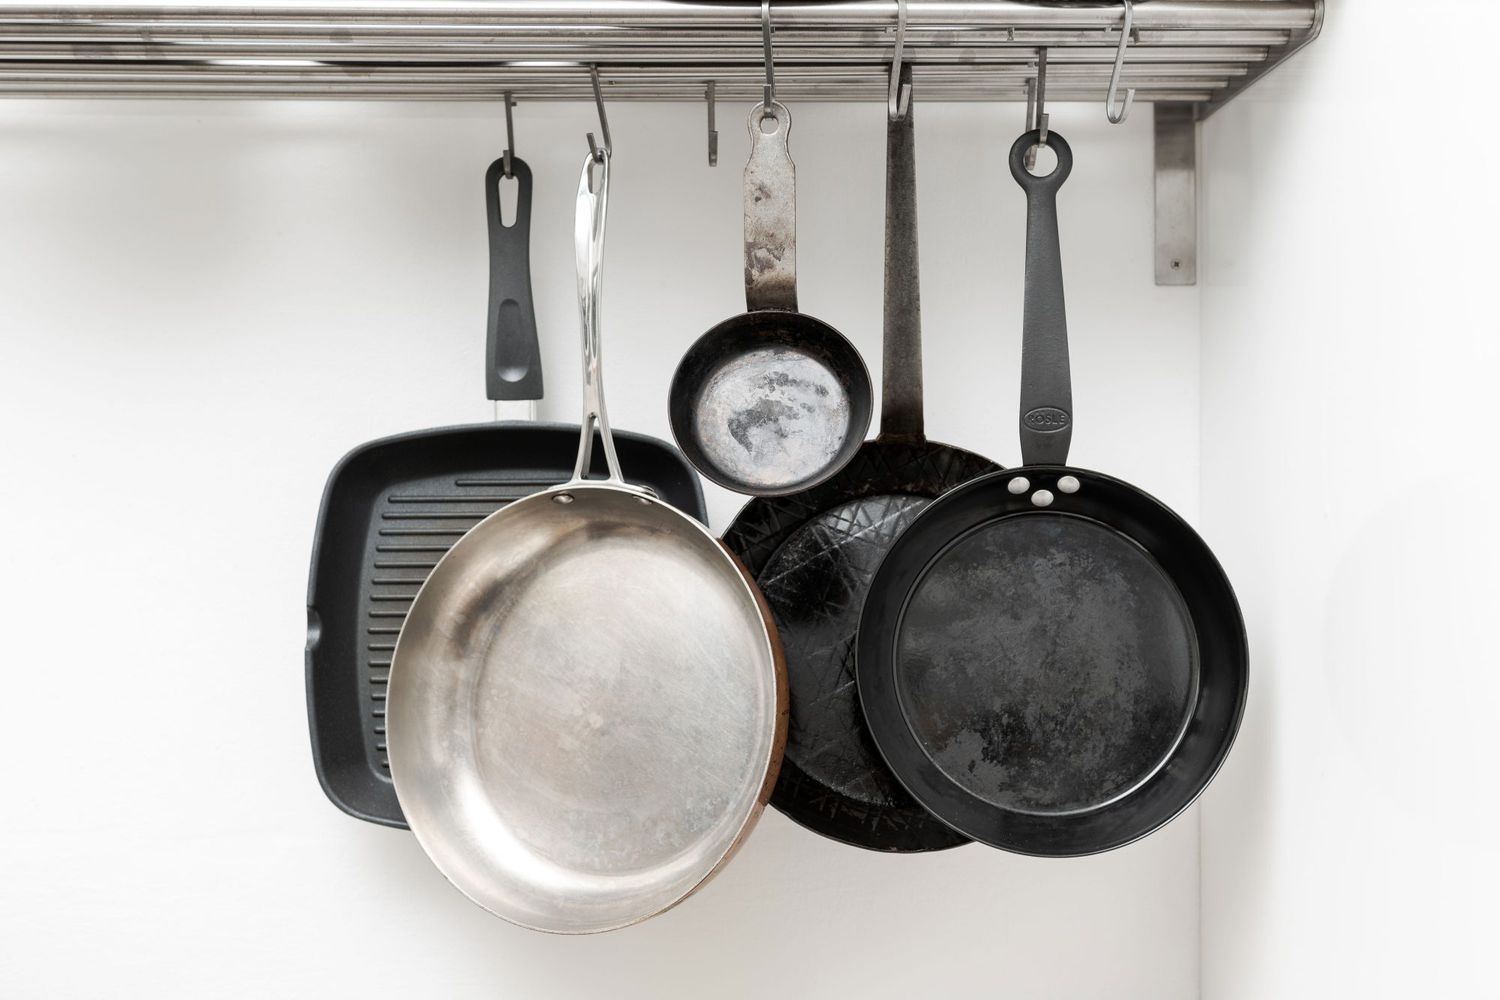 various cooking pan styles on hanging rack